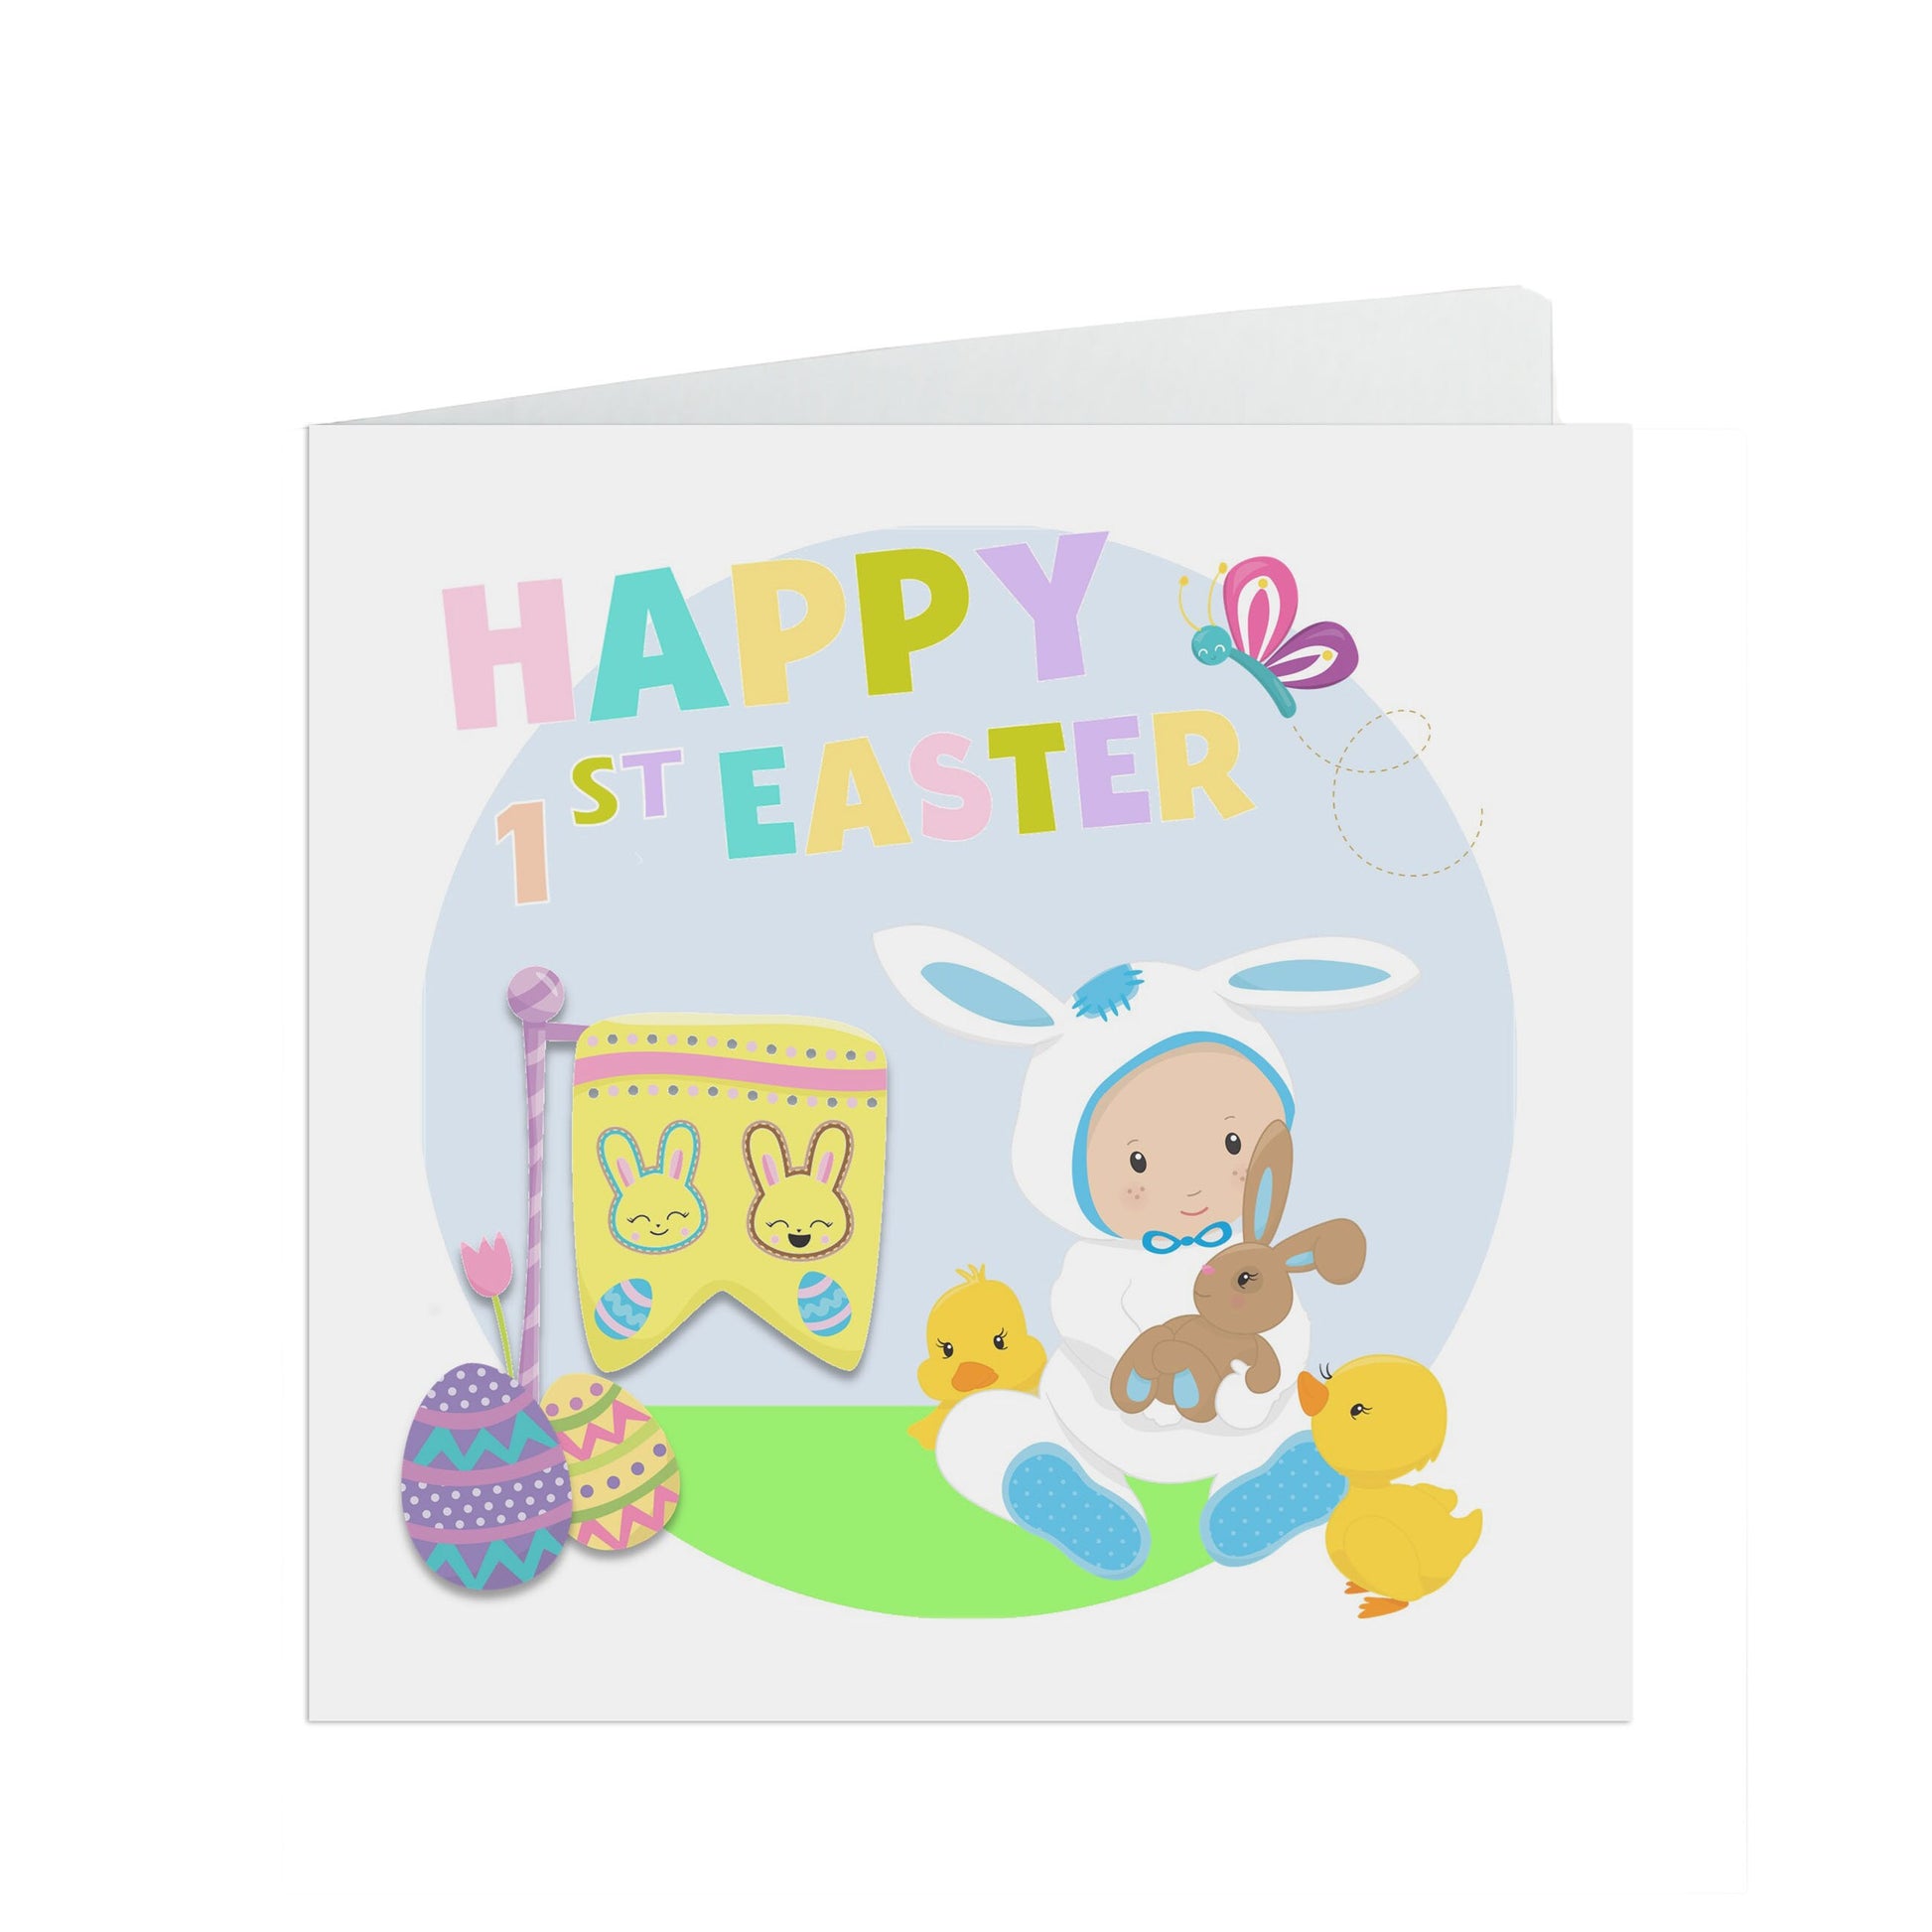 1st Easter Card for son, grandson, nephew, or baby boy, rabbit design